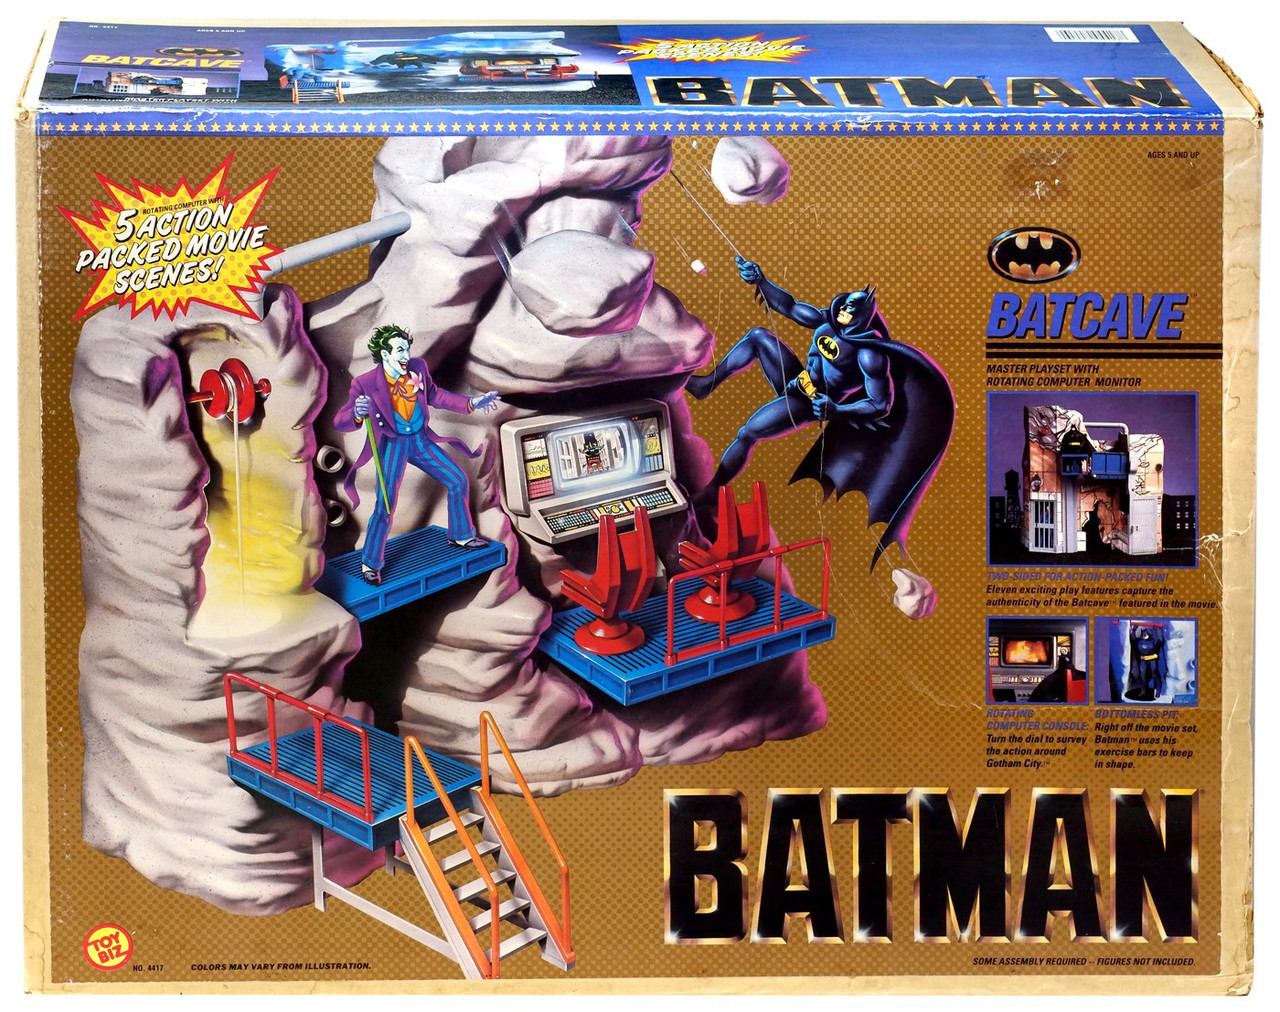 batman batcave toy